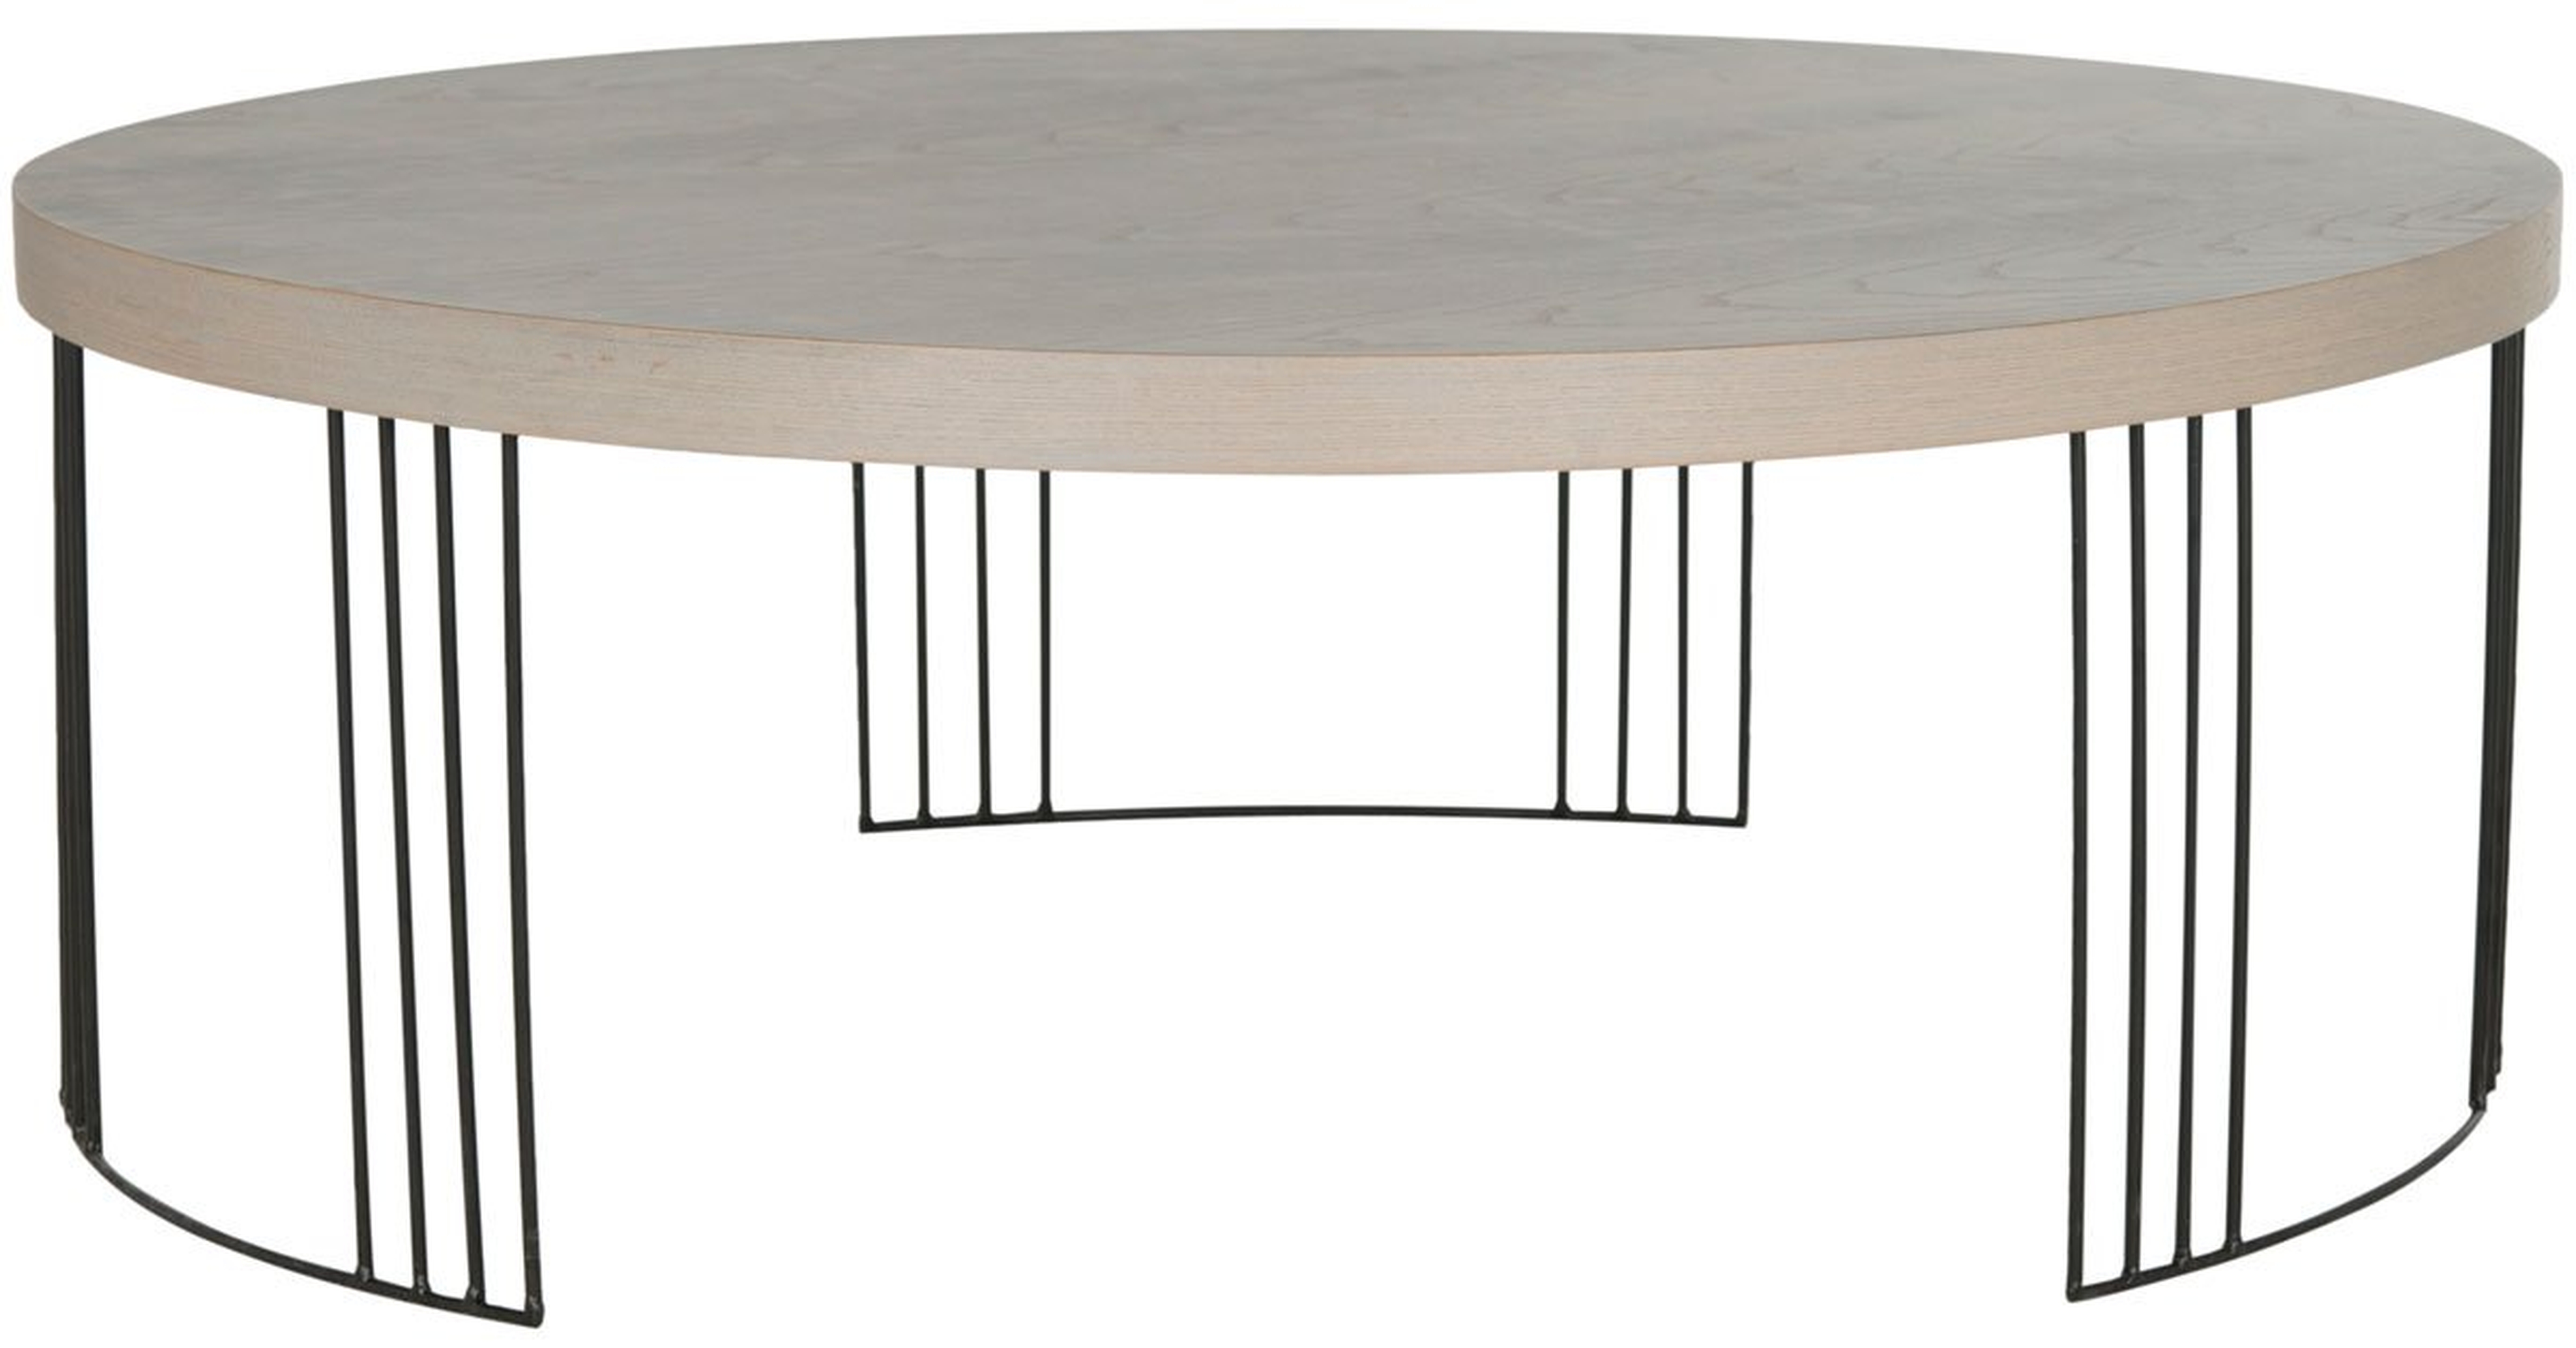 Keelin Mid Century Scandinavian Wood Coffee Table - Grey/Black - Arlo Home - Arlo Home